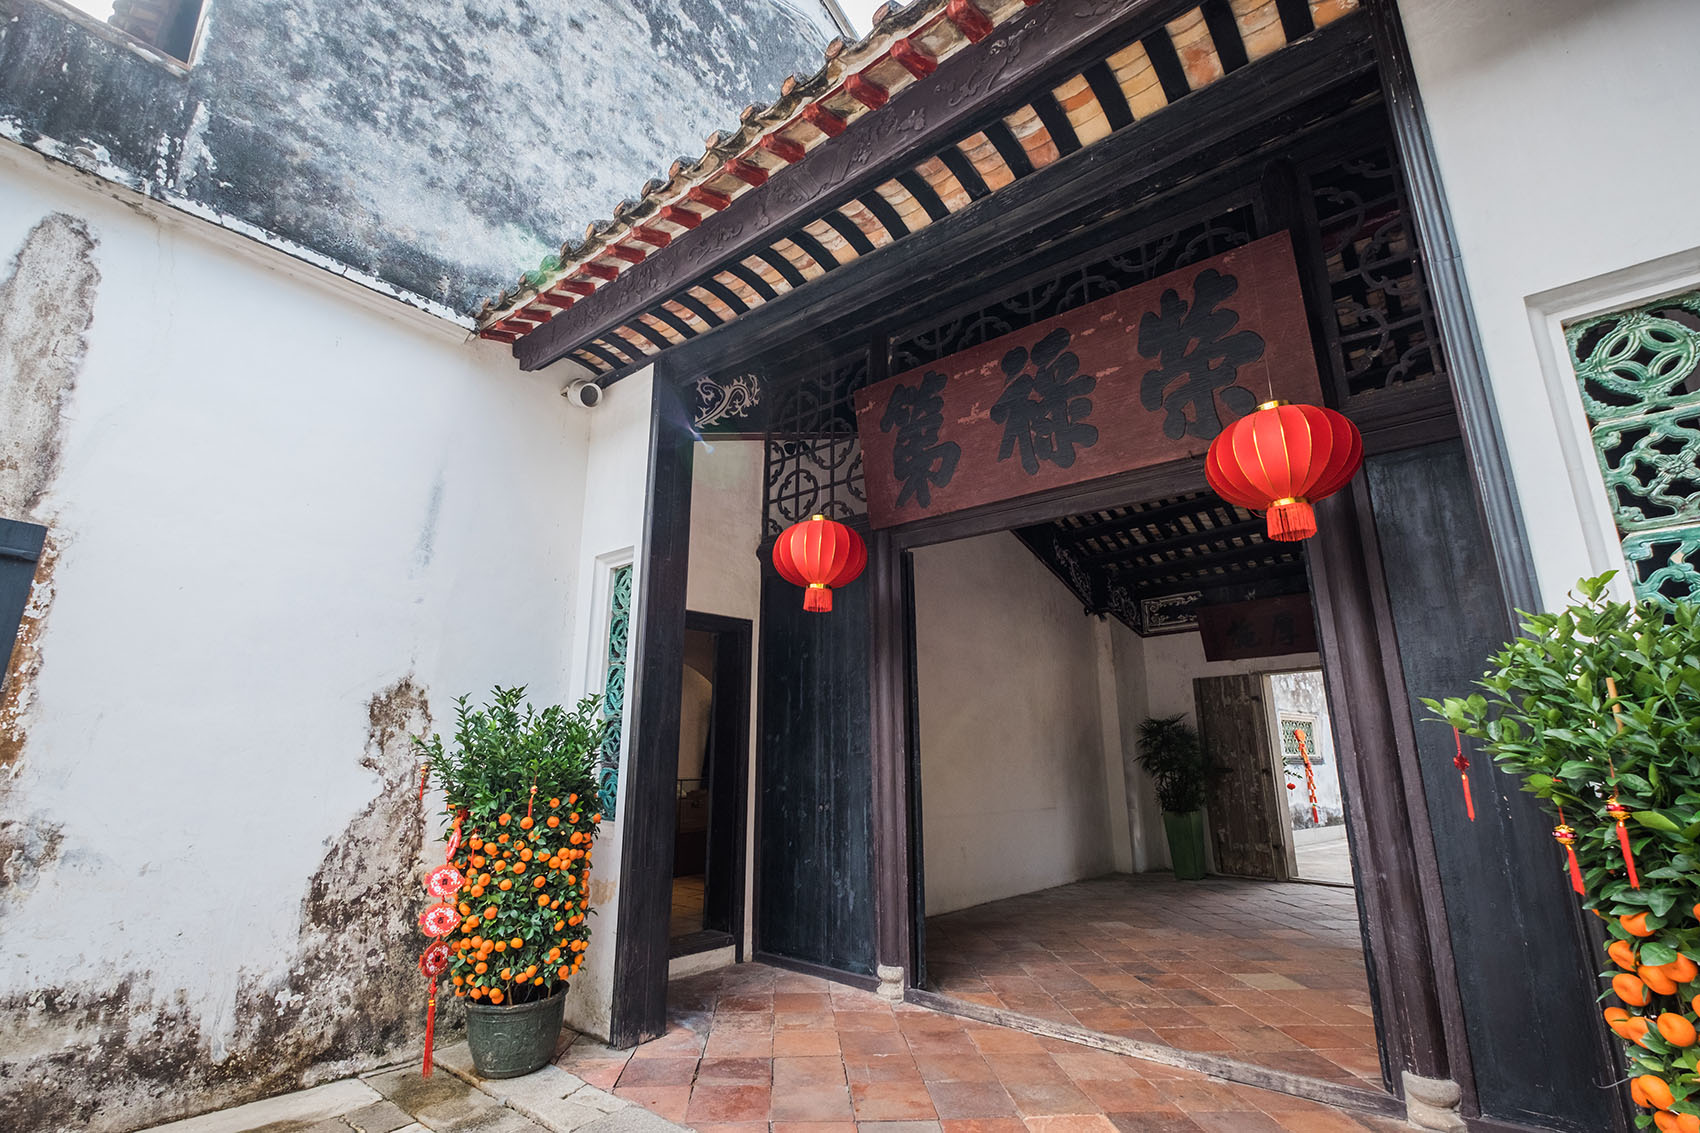 Mandarin's House: Entrance